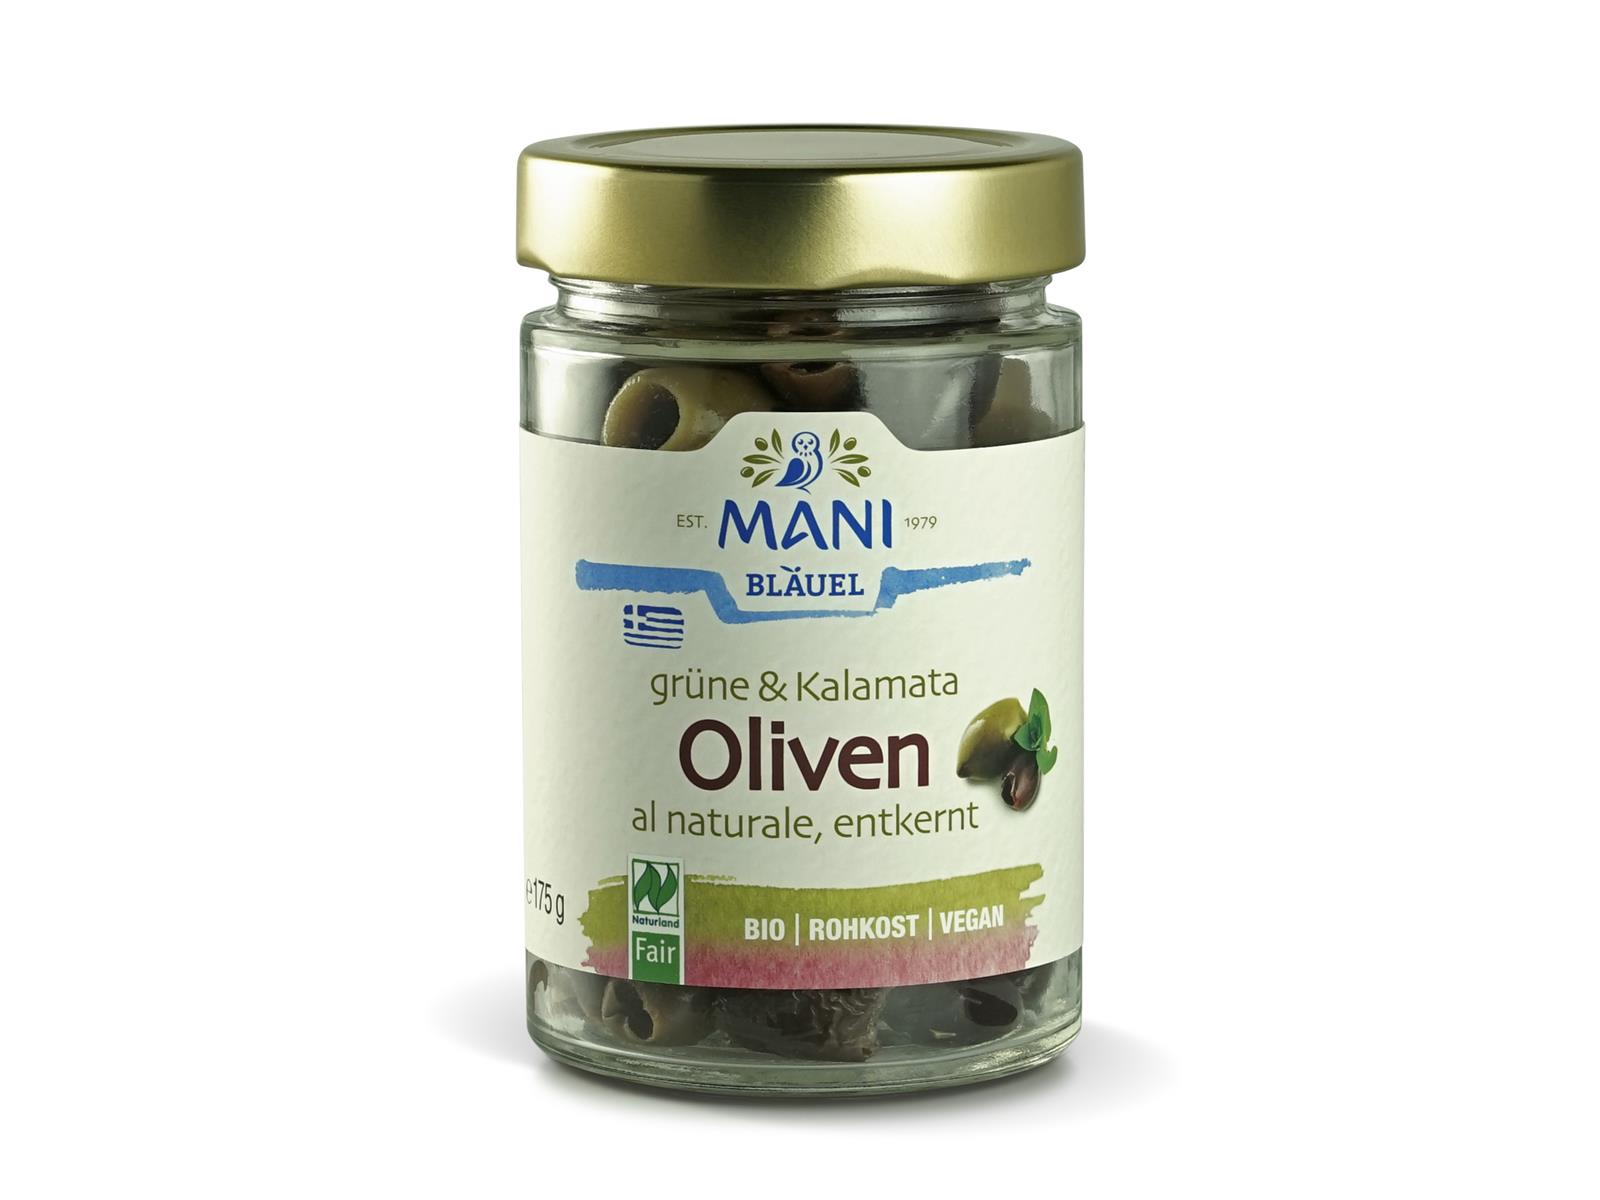 Mani Bläuel Grüne & Kalamata Oliven al naturale, entkernt 175 g